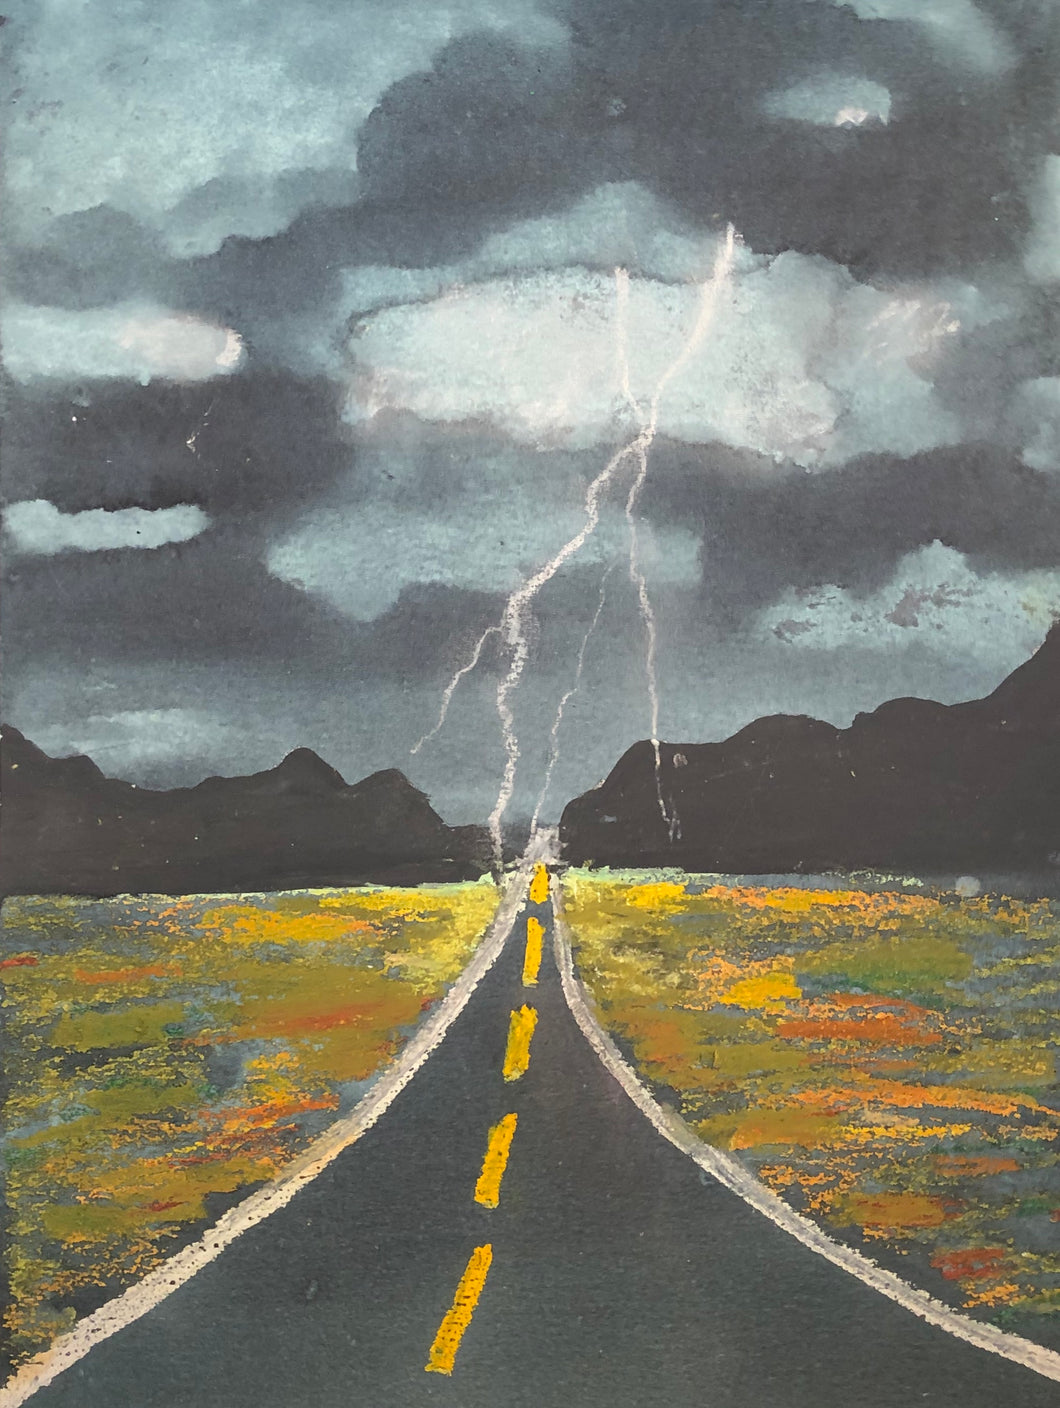 Paint up a Storm - Lightning Fields inspired by Walter De Maria